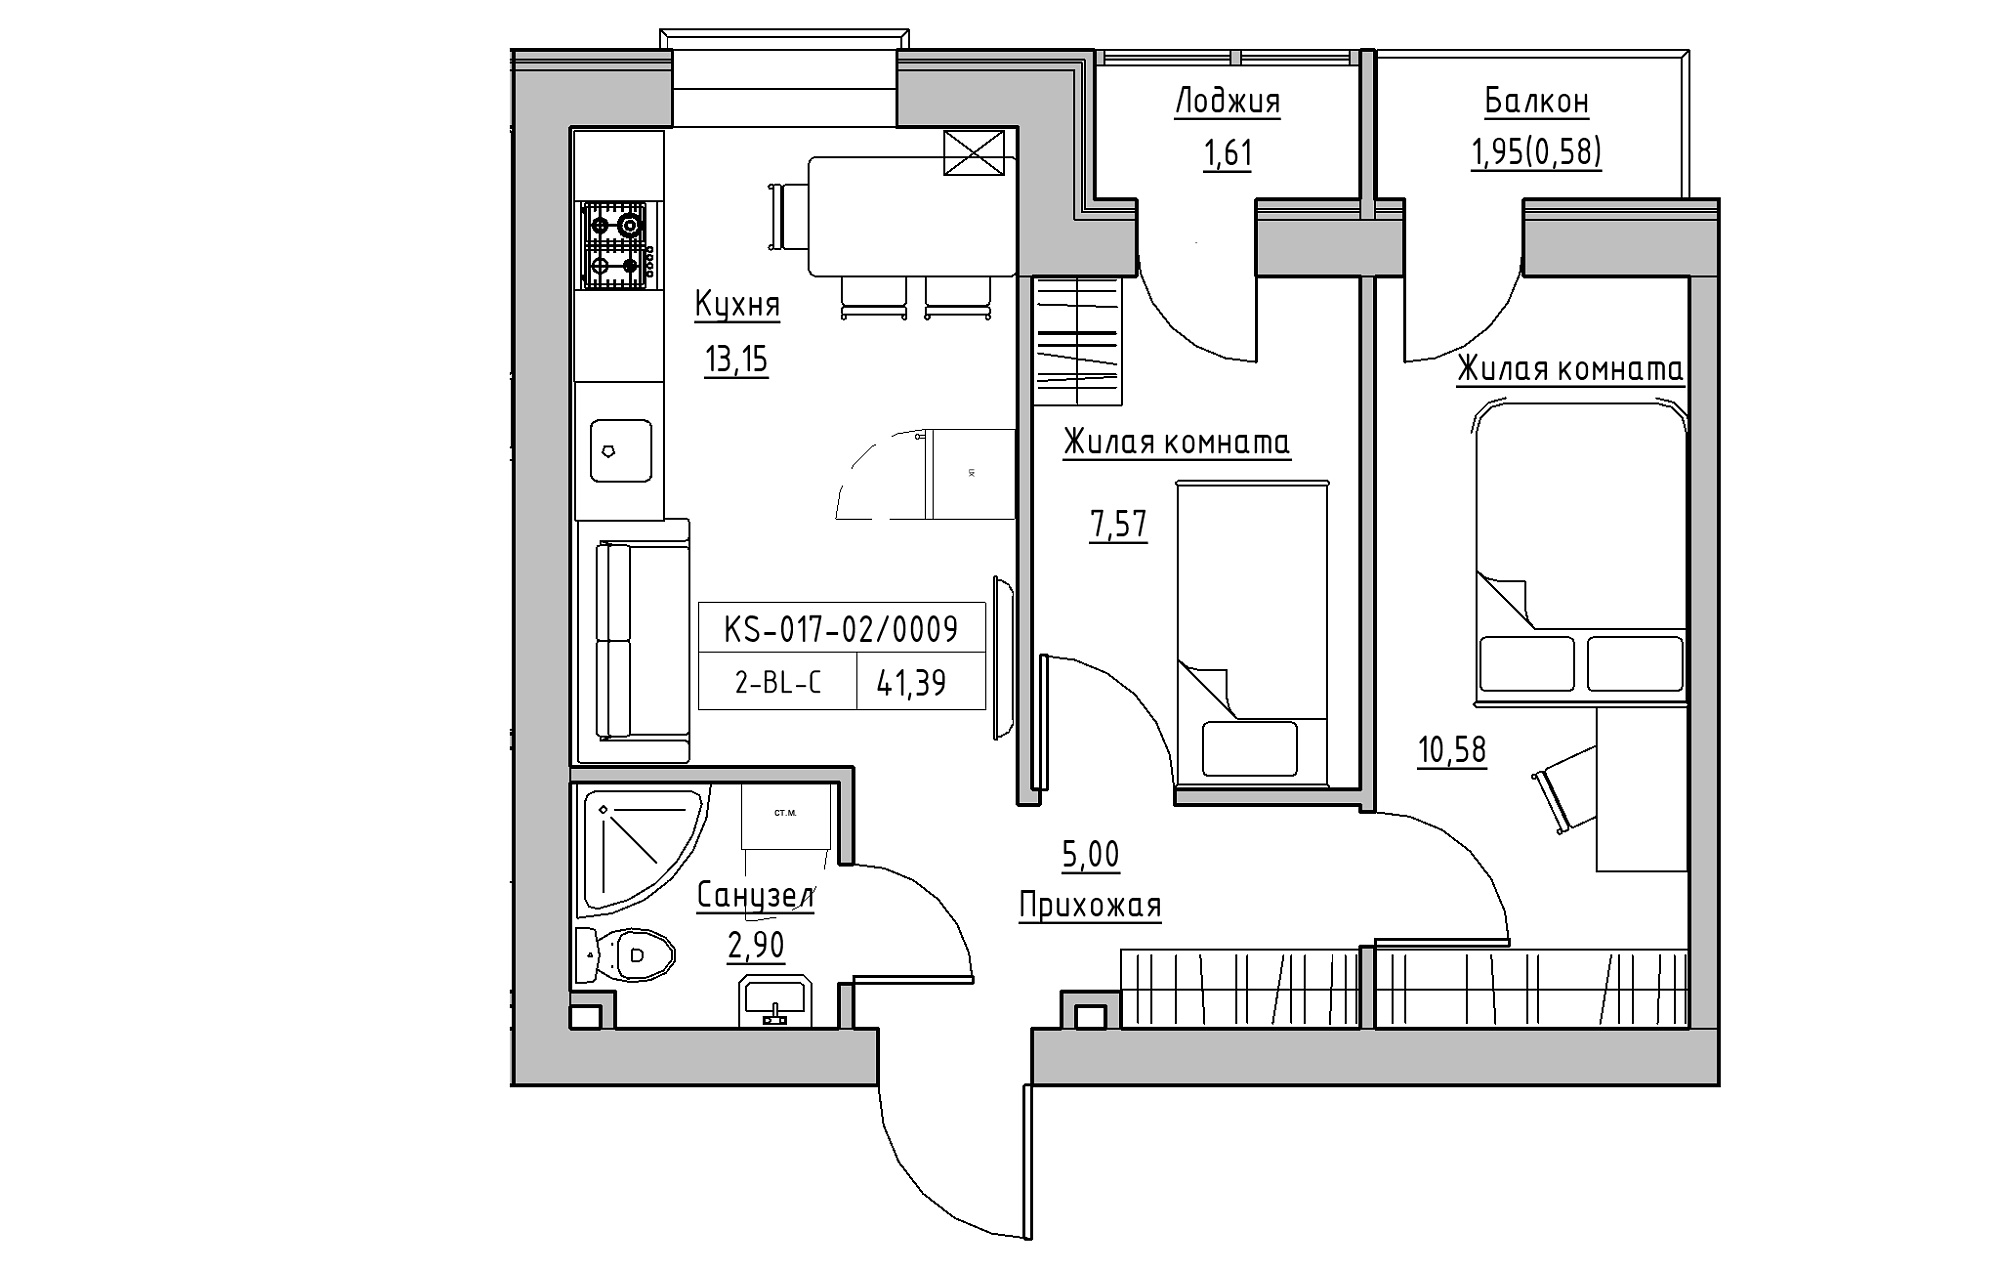 Planning 2-rm flats area 41.39m2, KS-017-02/0009.